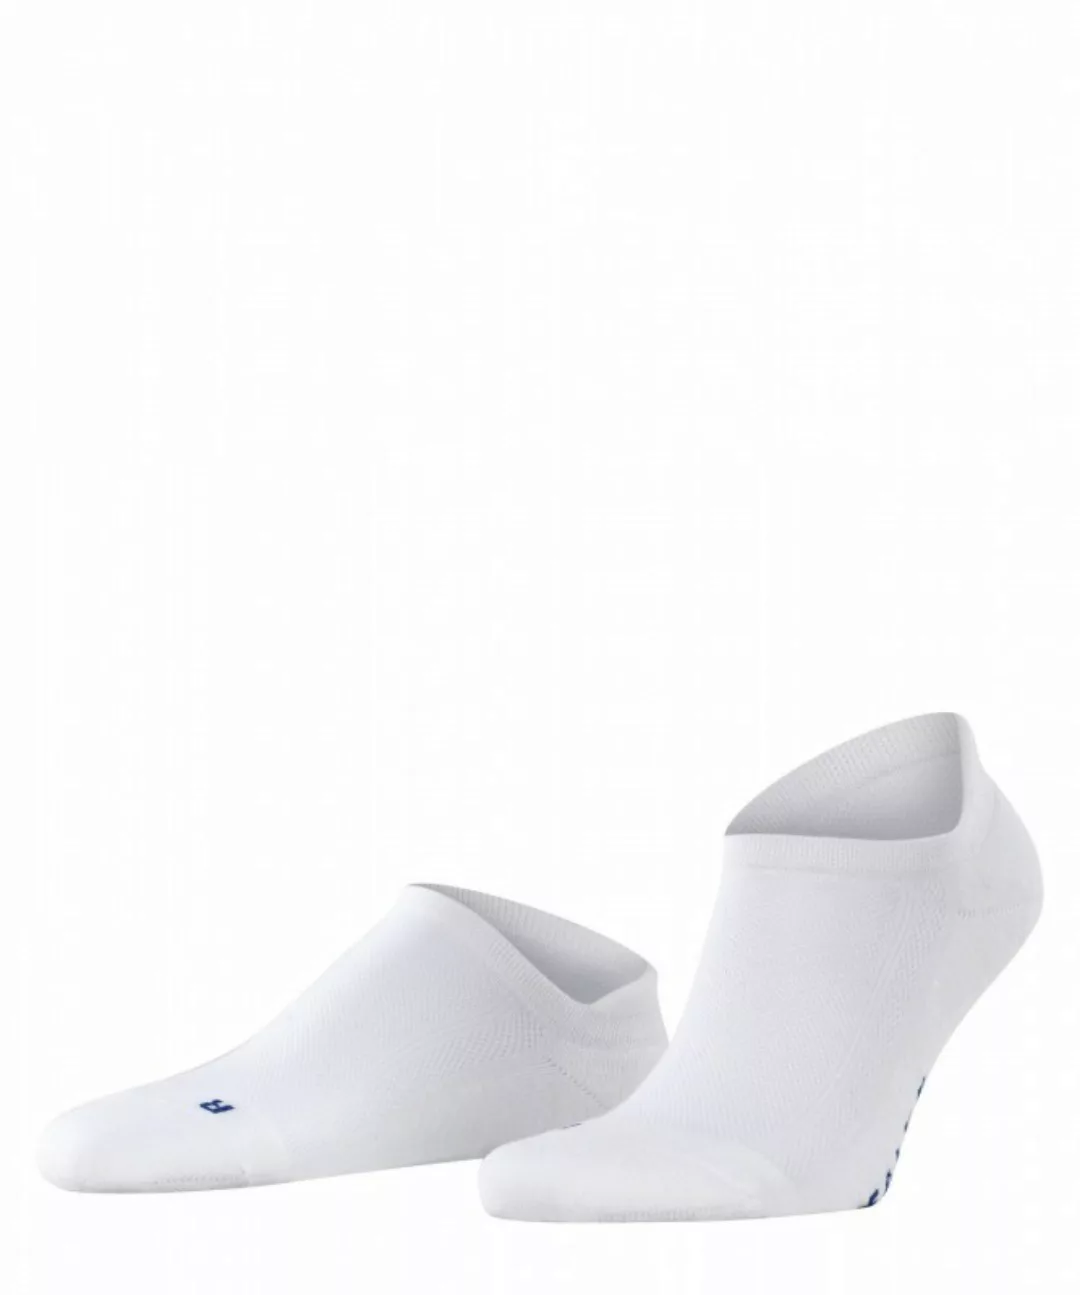 Falke Socken Cool Kick Weiß günstig online kaufen